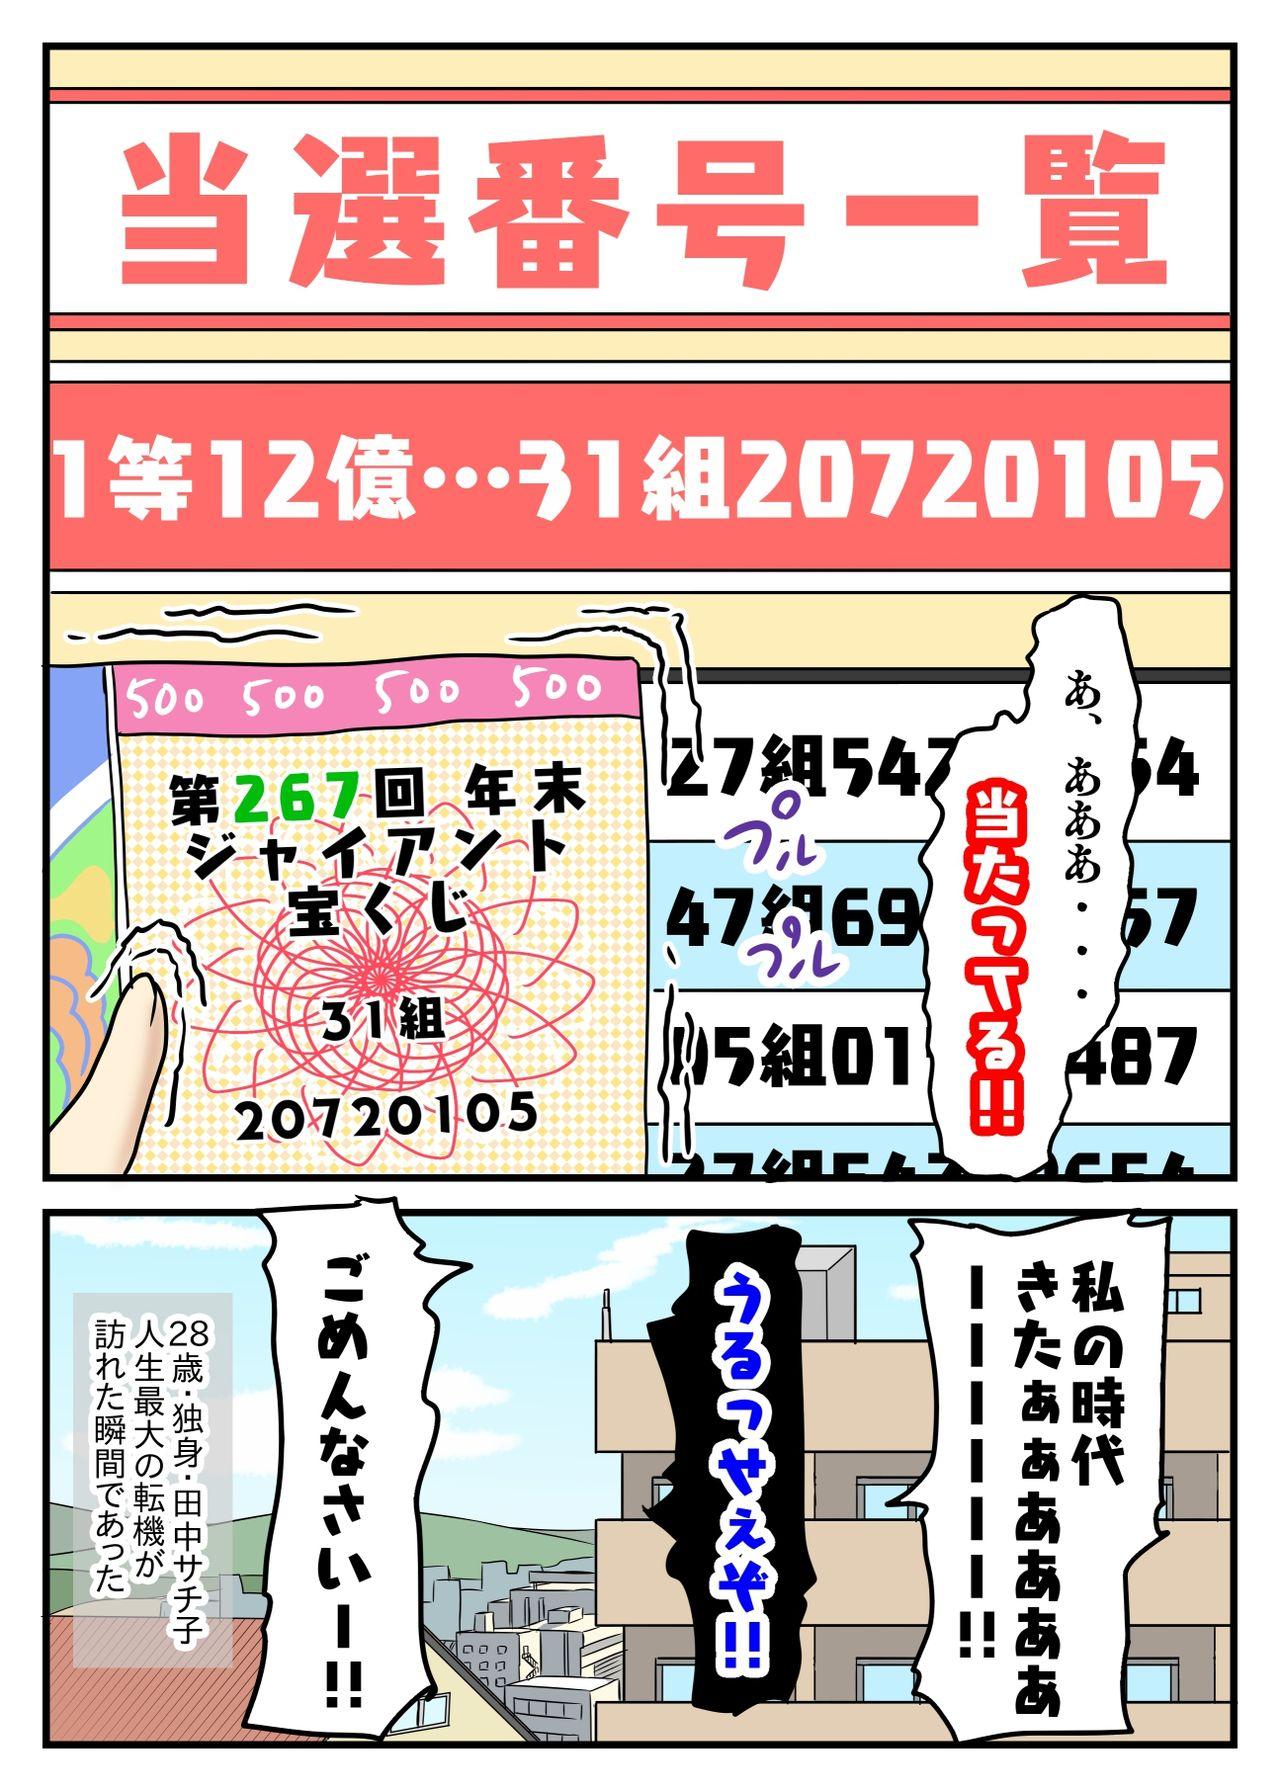 Taiwan I Won the Lottery Big Time, So I Splurged at the Luxury Otoko no Ko Brothel - Original Goldenshower - Page 3